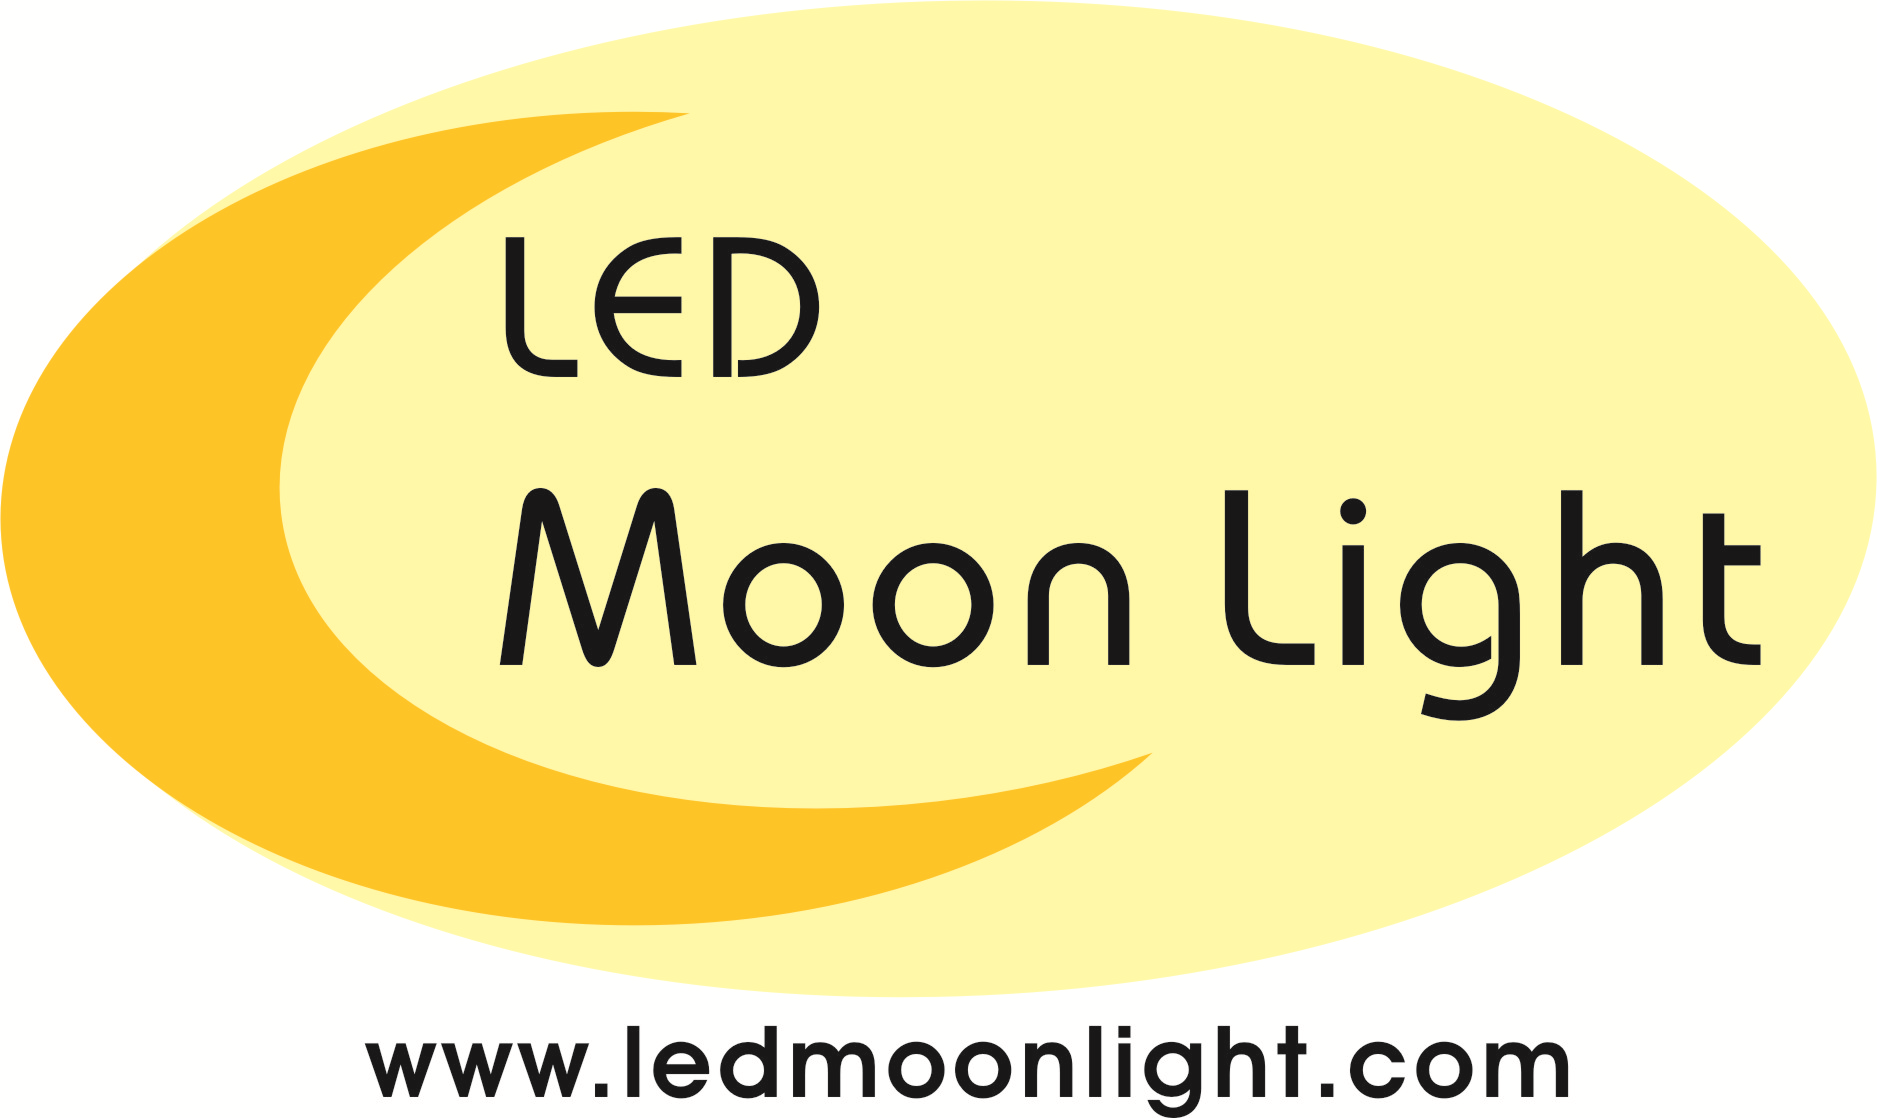 Led Moon Light